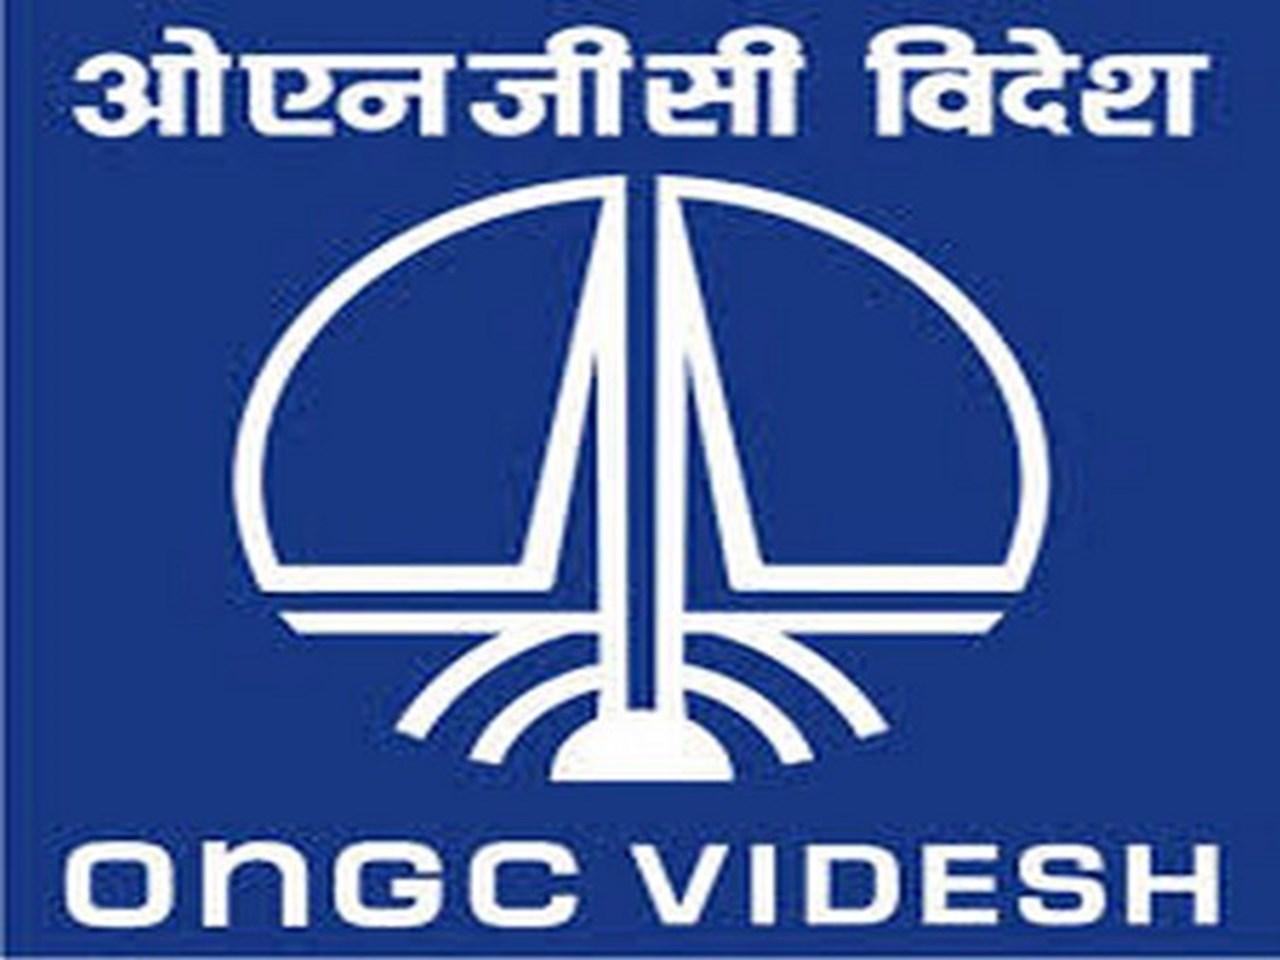 Rajarshi Gupta named as Managing Director of ONGC Videsh_40.1